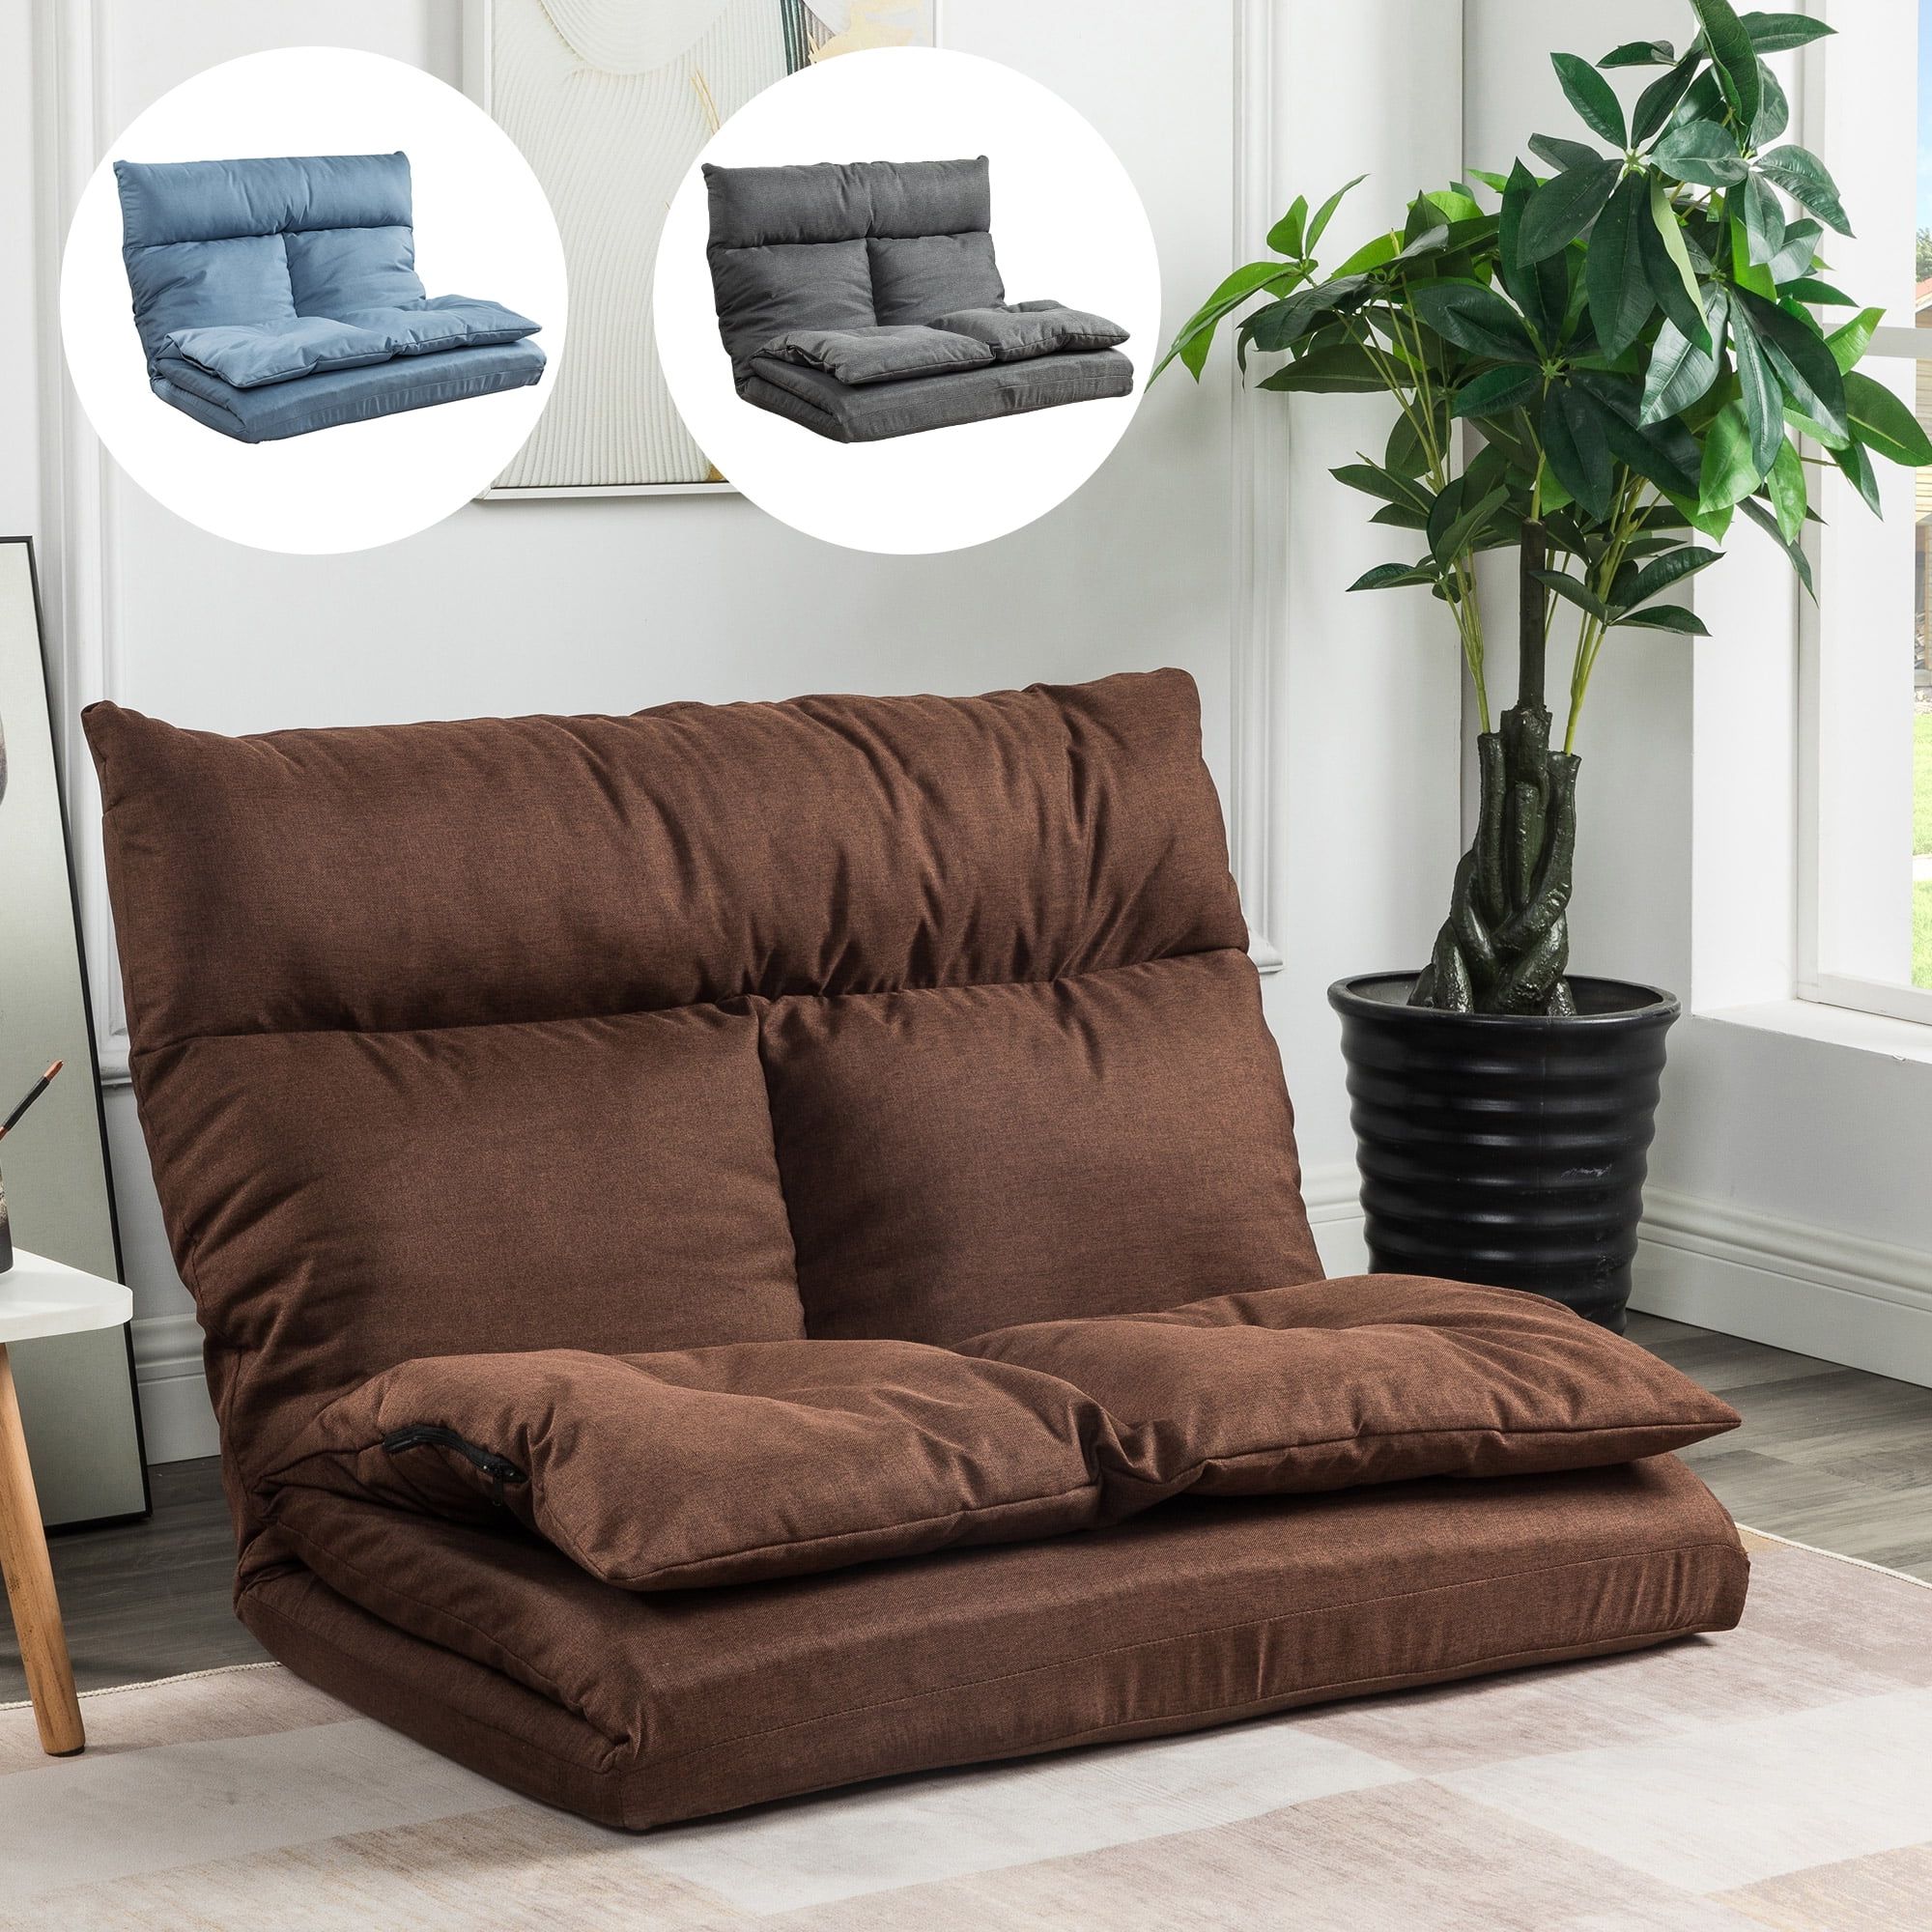 Floor Sofa, Folding Leisure Sofa Bed Adjustable Futon Sofa, Brown Regarding 2 In 1 Foldable Sofas (Gallery 10 of 20)